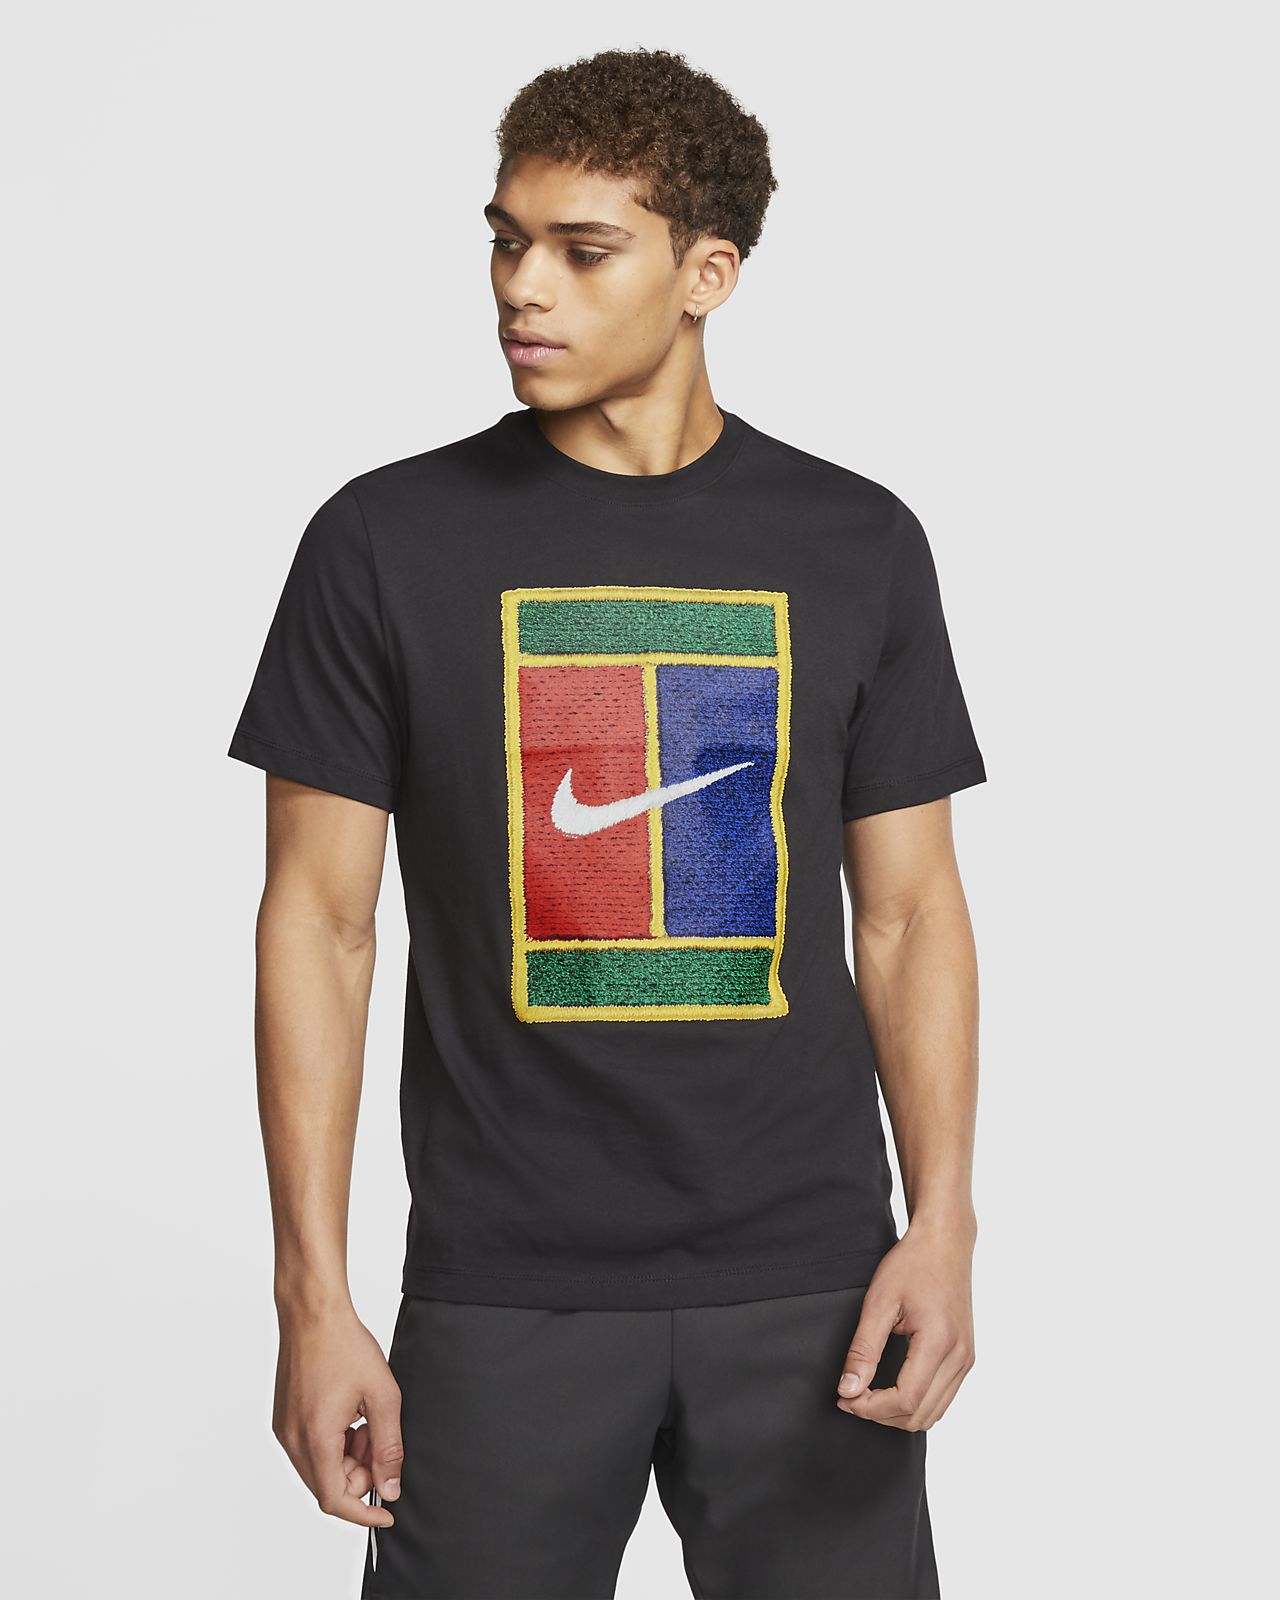 balance Calm Disturbance Nikecourt T Shirt Factory Sale, SAVE 50% - aveclumiere.com